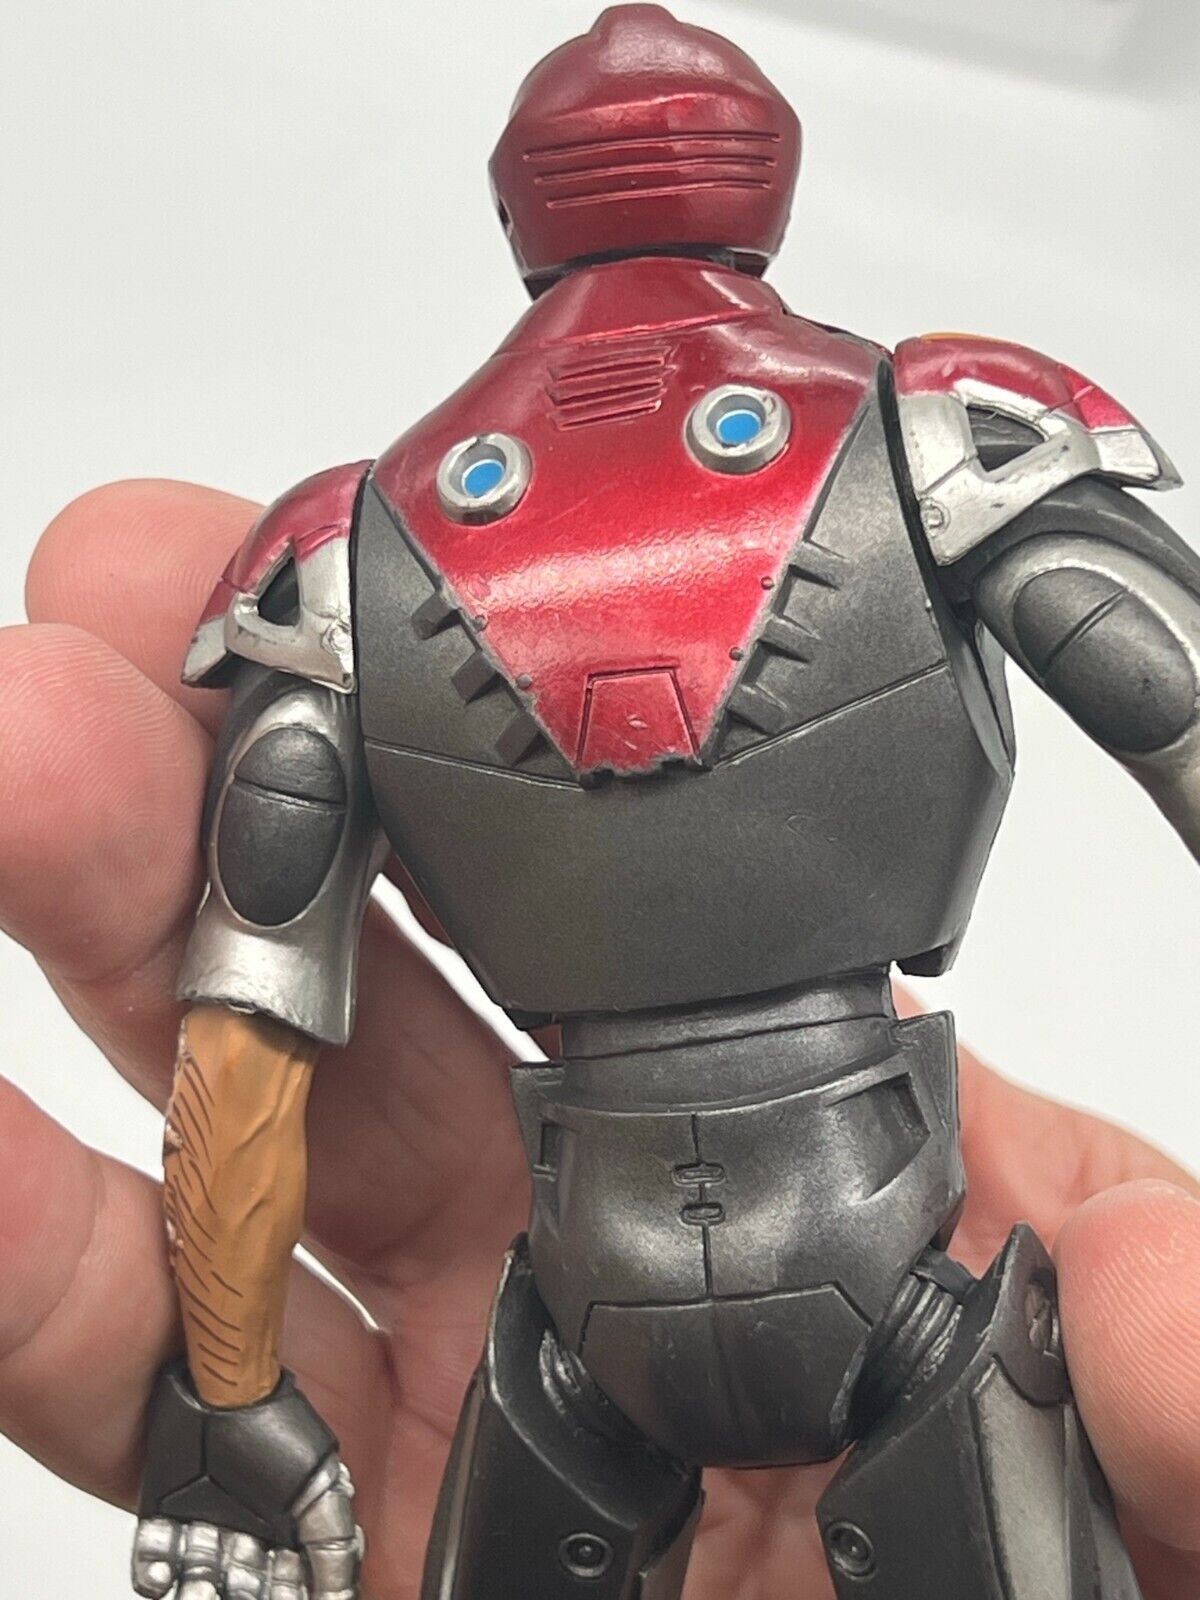 Marvel Select Ultimate Iron Man 7.5" Action Figure Diamond Select Toys - Loose